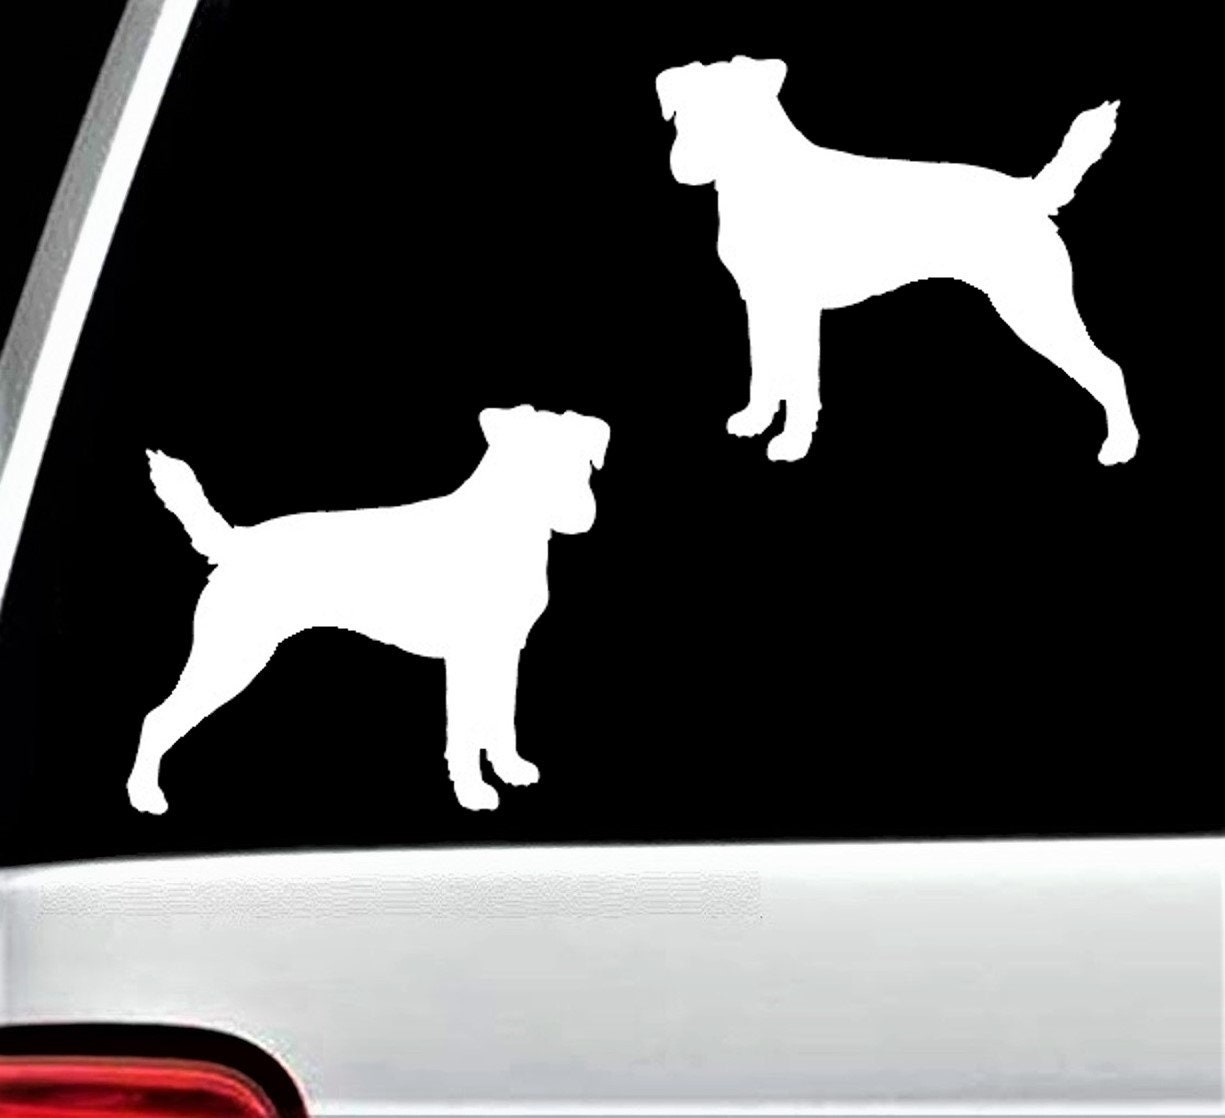 Generic Auto Sticker Autoaufkleber Lustig Dog Jack Russell Terrier